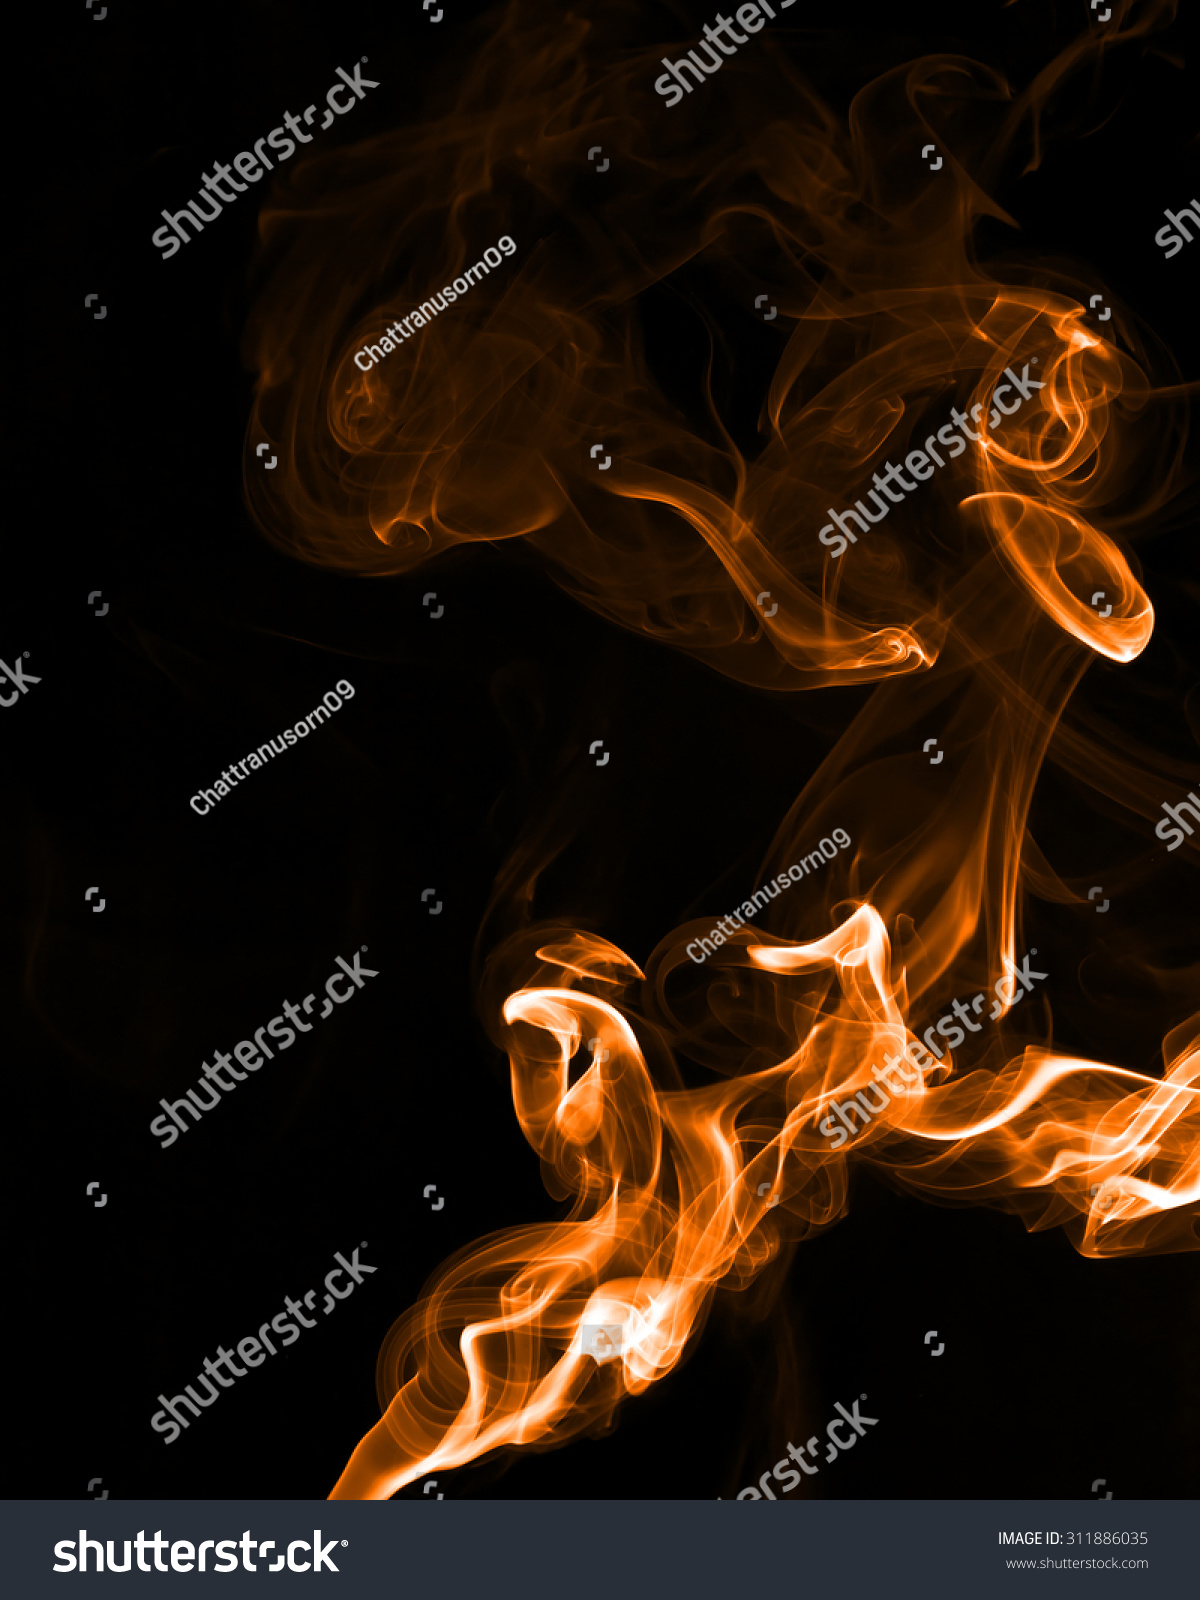 Abstract Orange Smoke Isolate On Black Stock Photo 311886035 ...